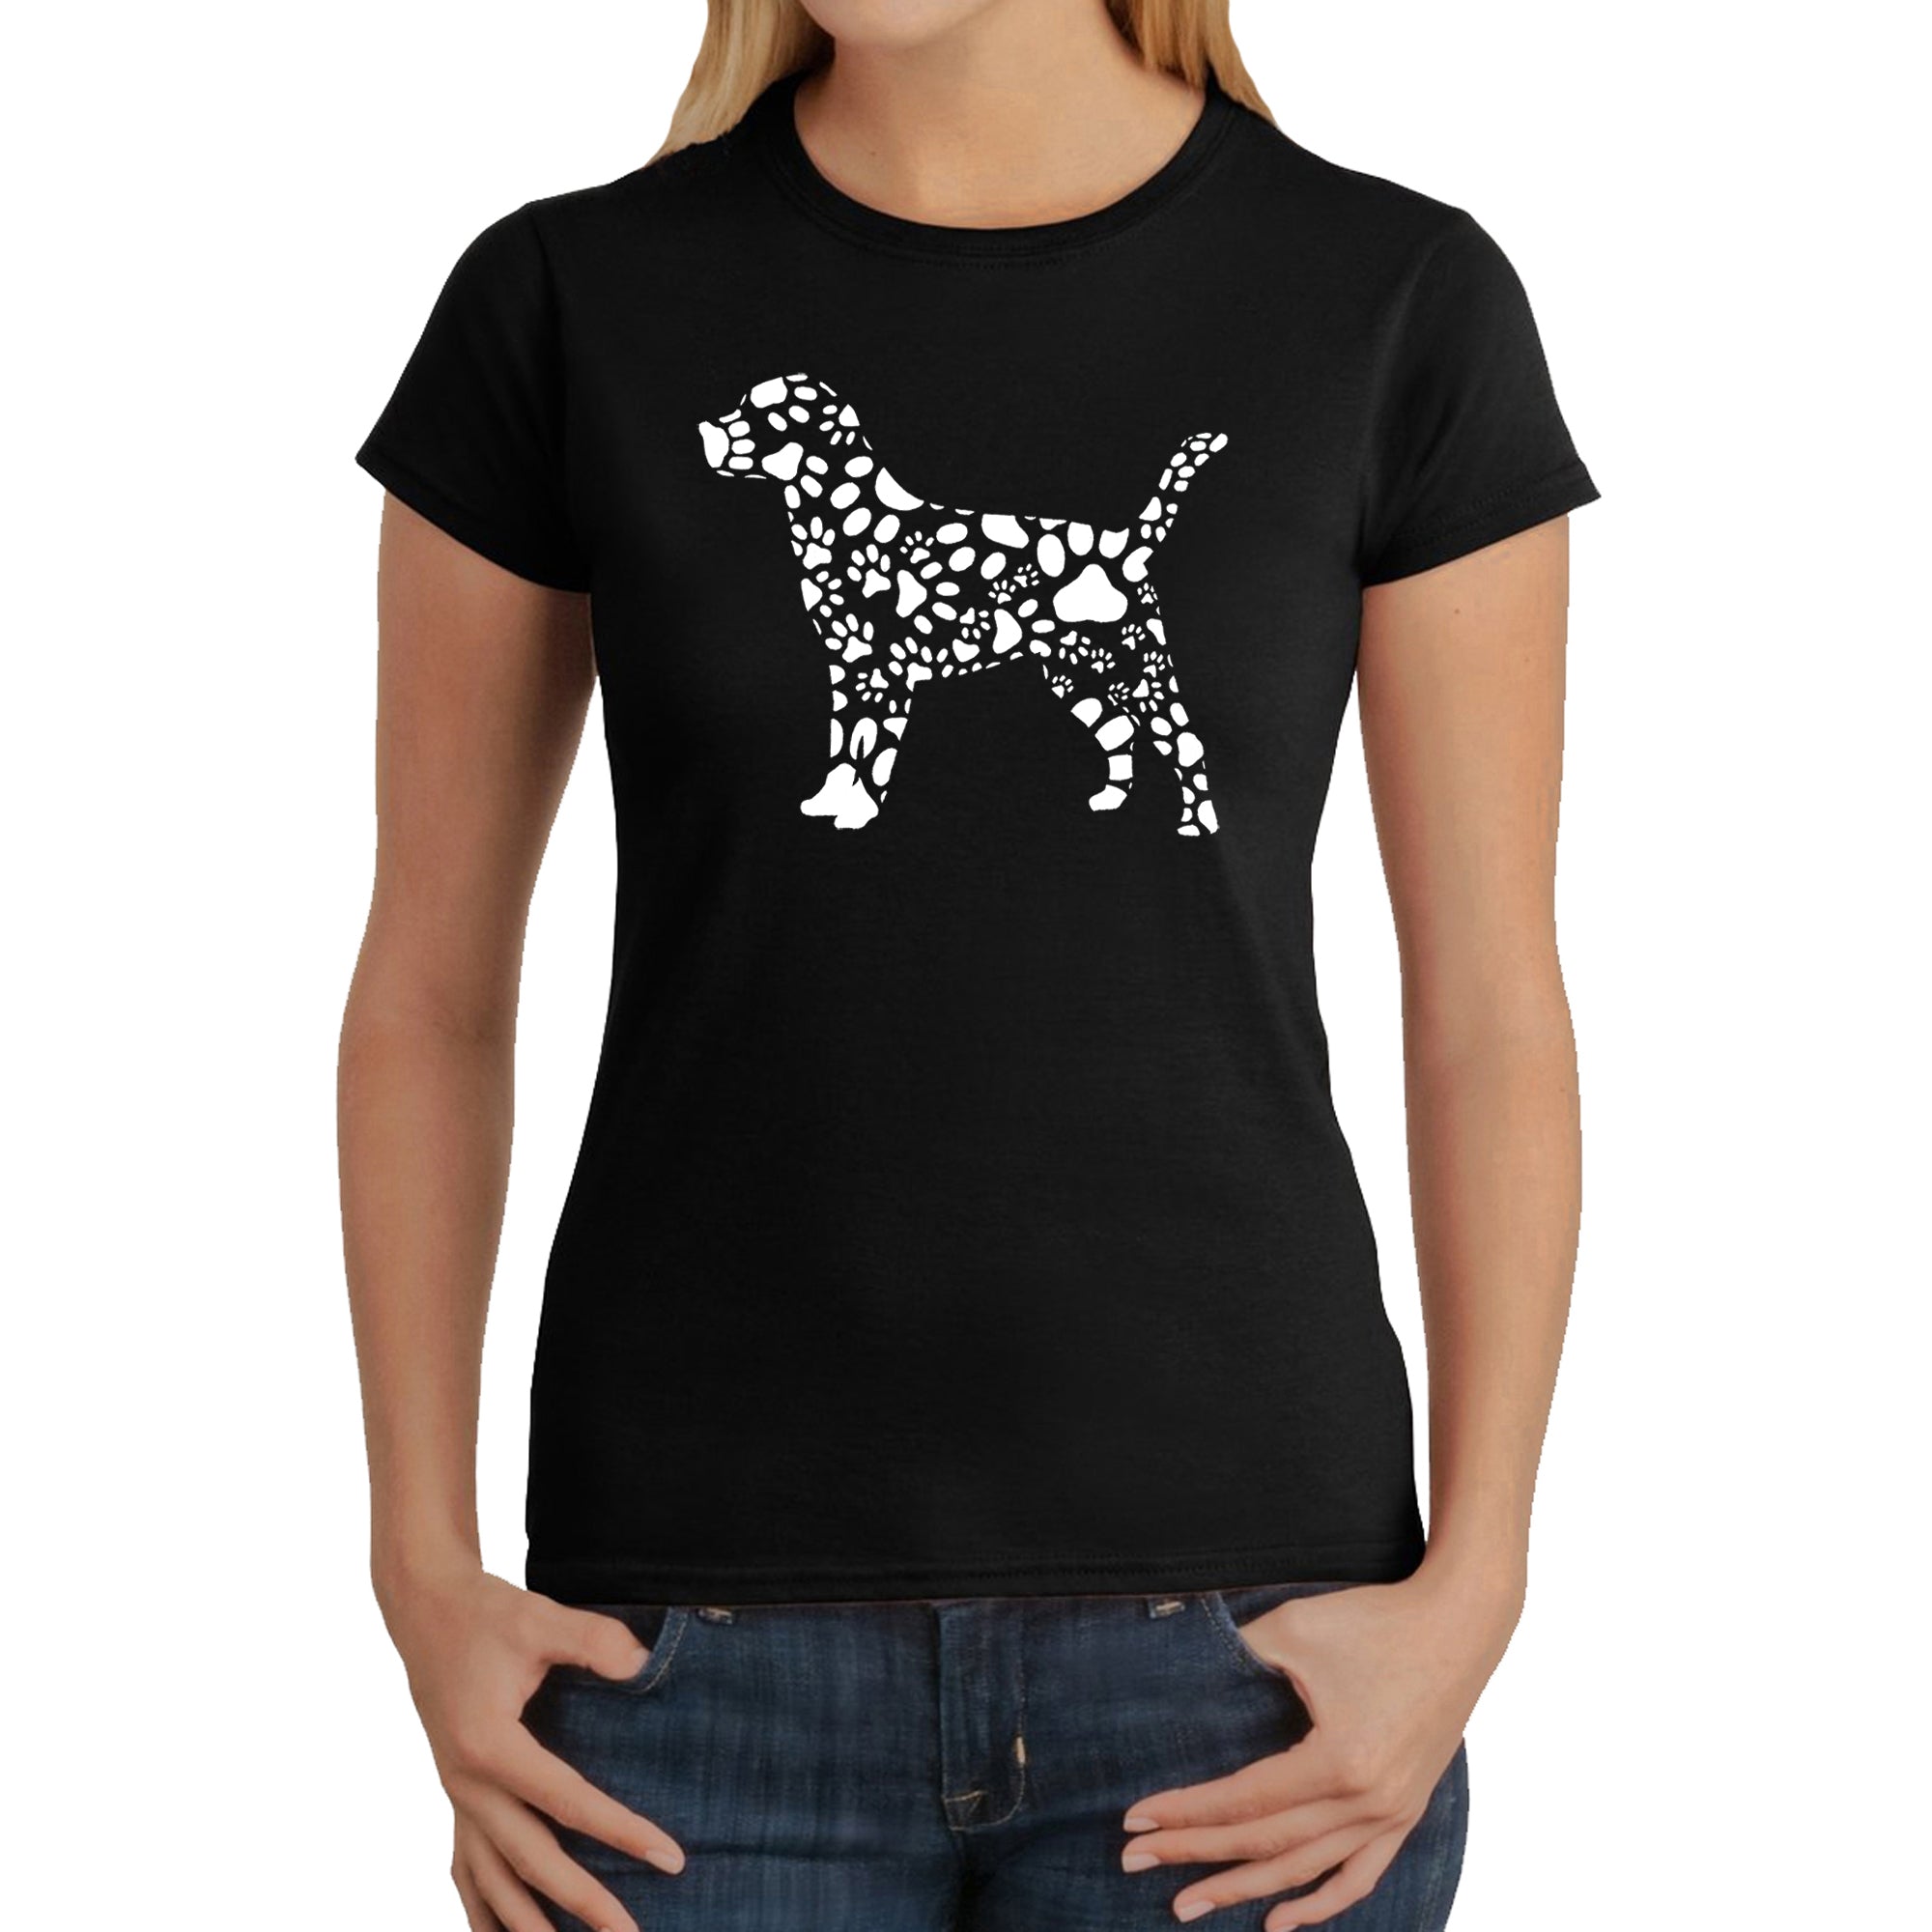 Dog Paw Prints - Women's Word Art T-Shirt - Kelly - Small